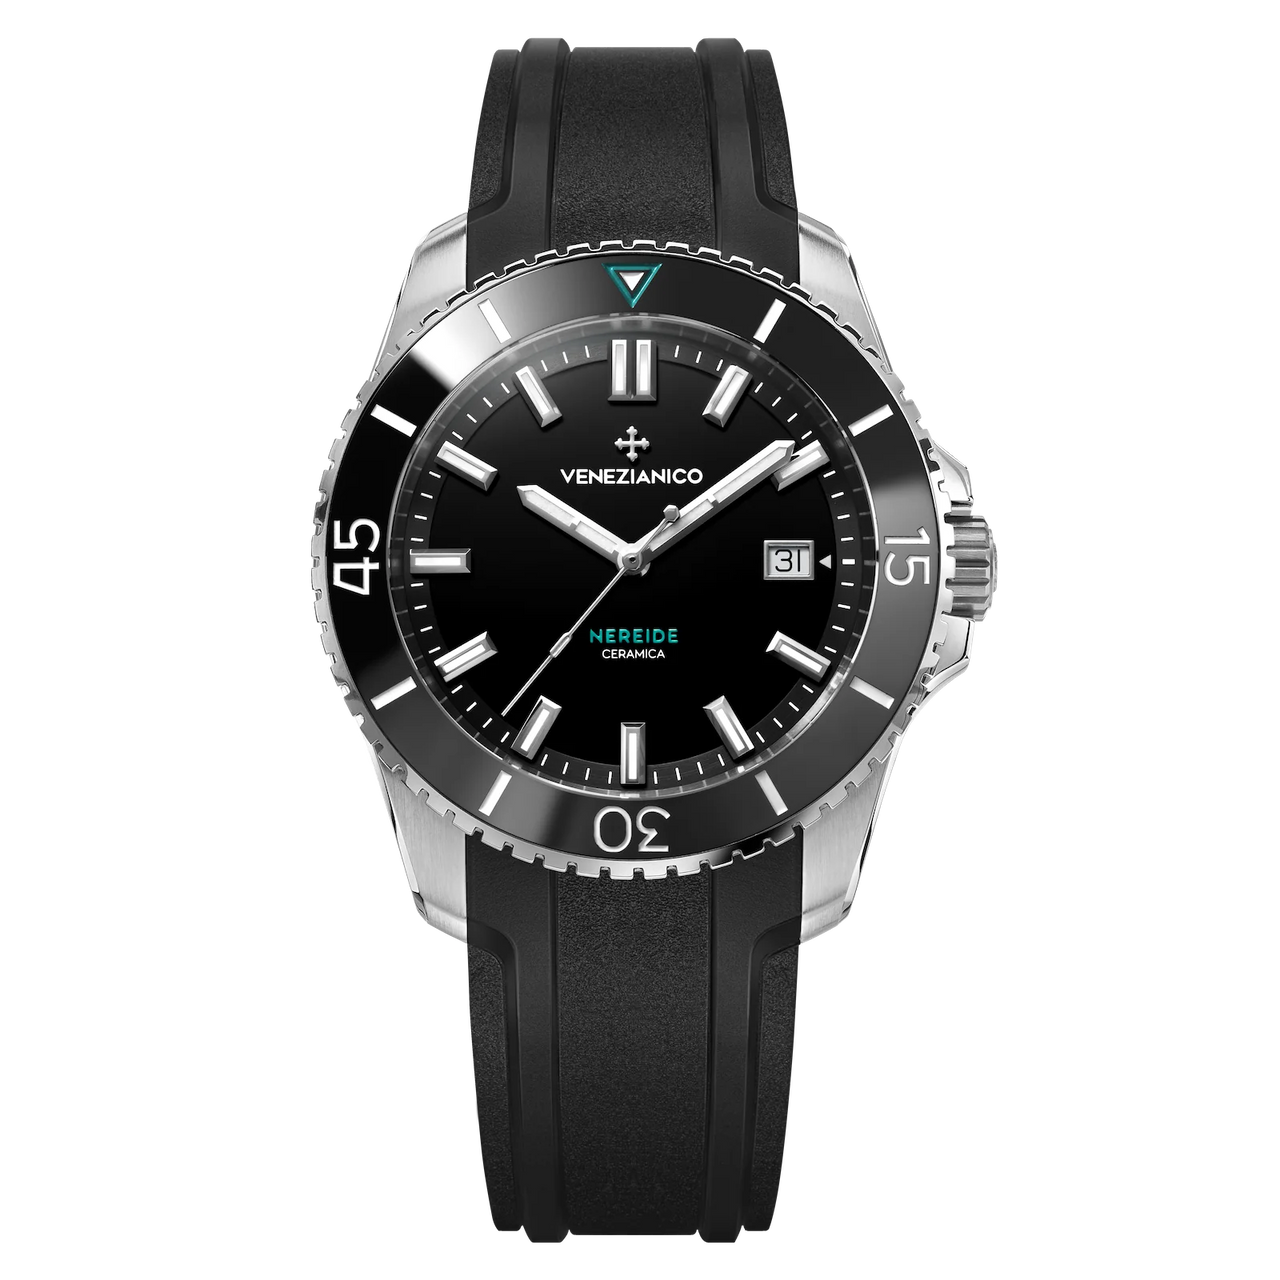 Venezianico Automatic Watch Nereide Ceramica Black 4521530